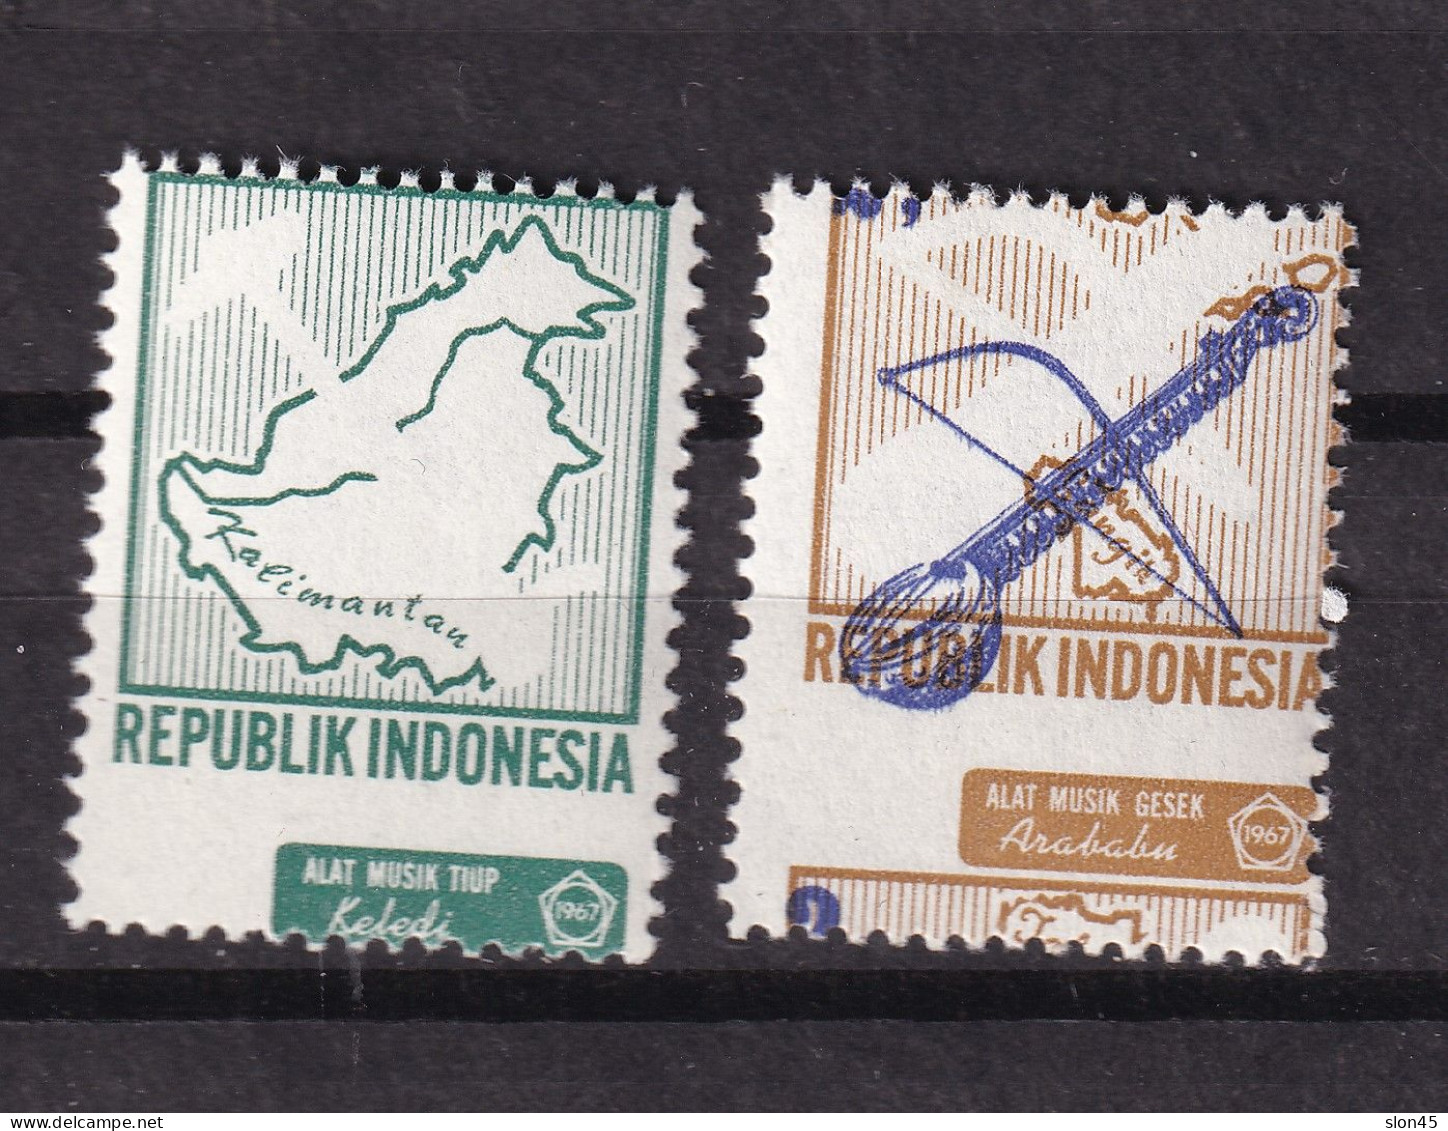 Indonesia 1969 Imperf Proofs MNH 15456 - Fouten Op Zegels